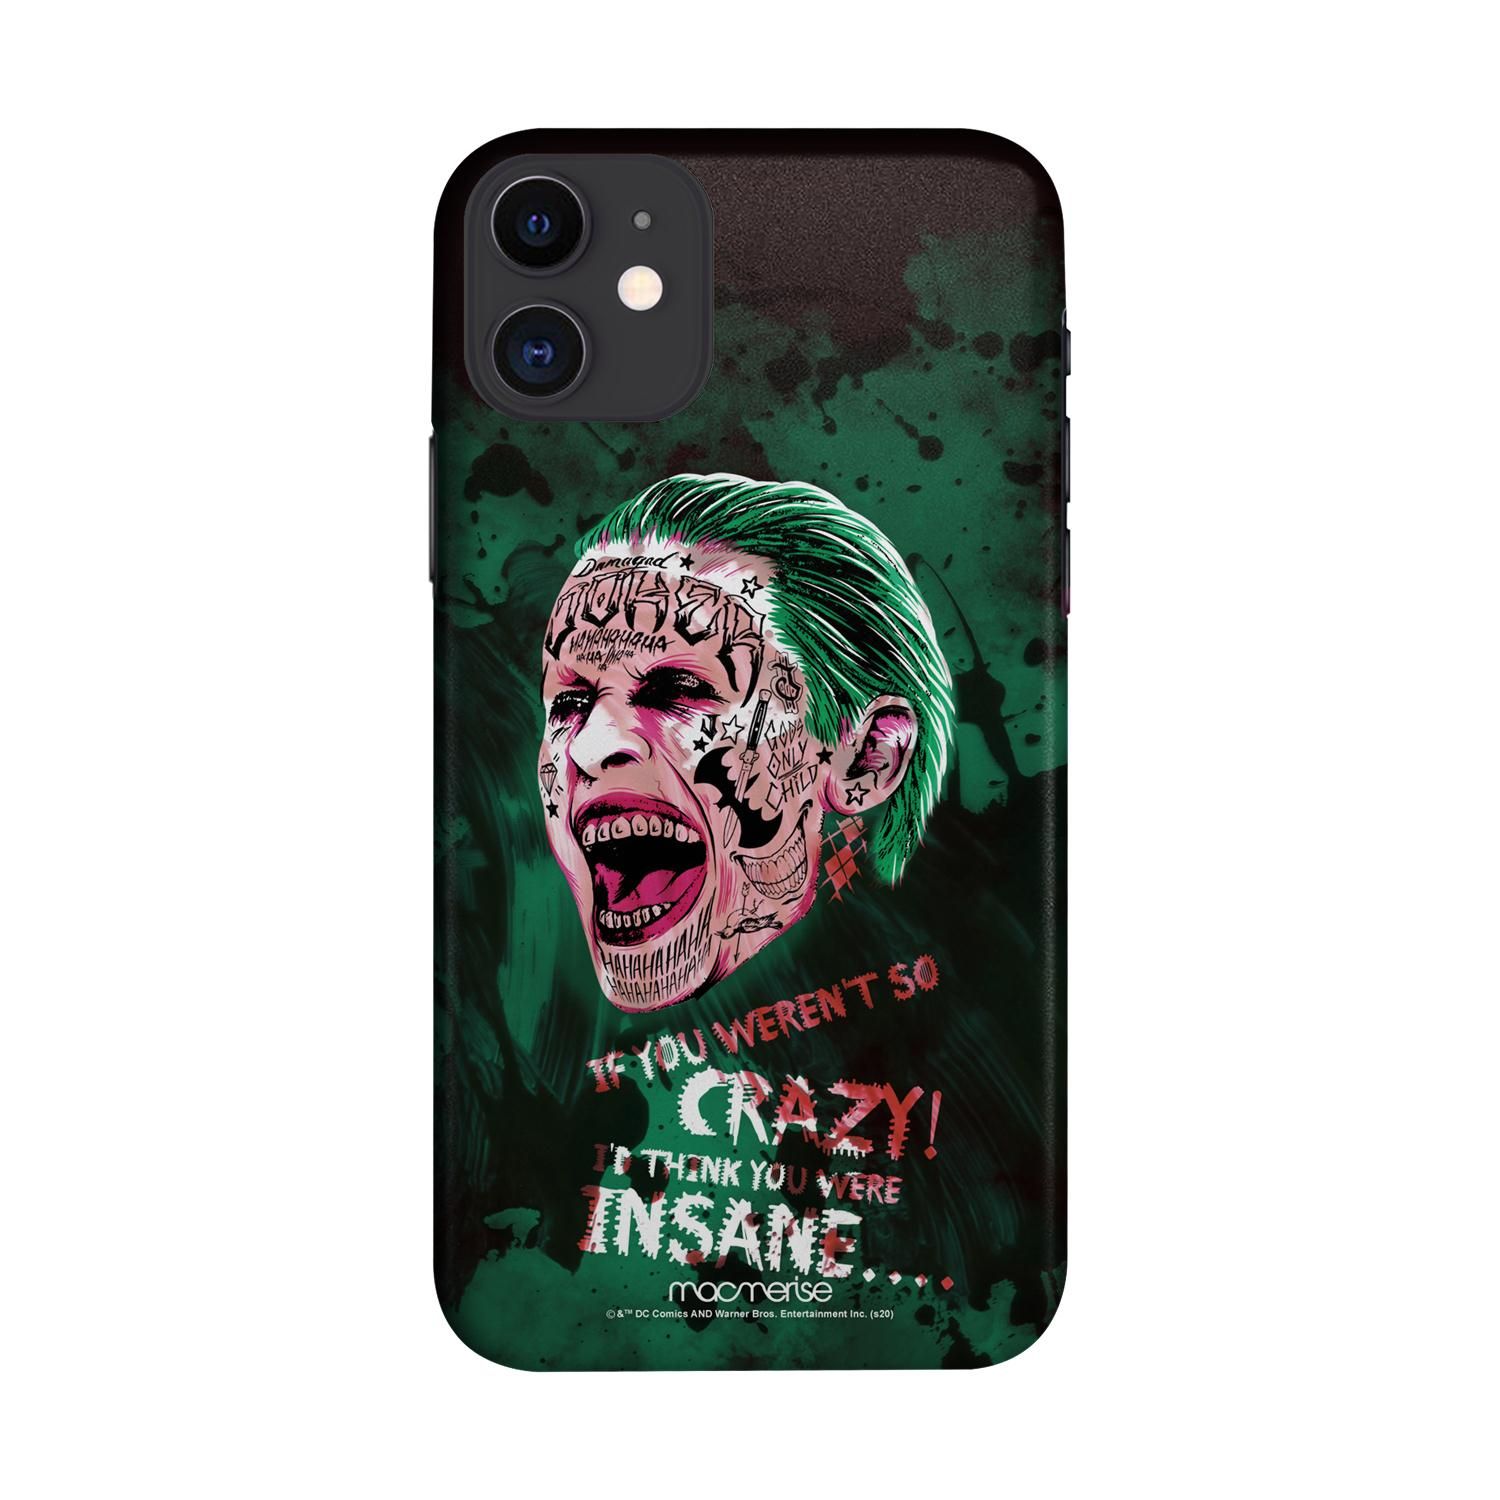 Buy Crazy Insane Joker - Sleek Phone Case for iPhone 11 Online